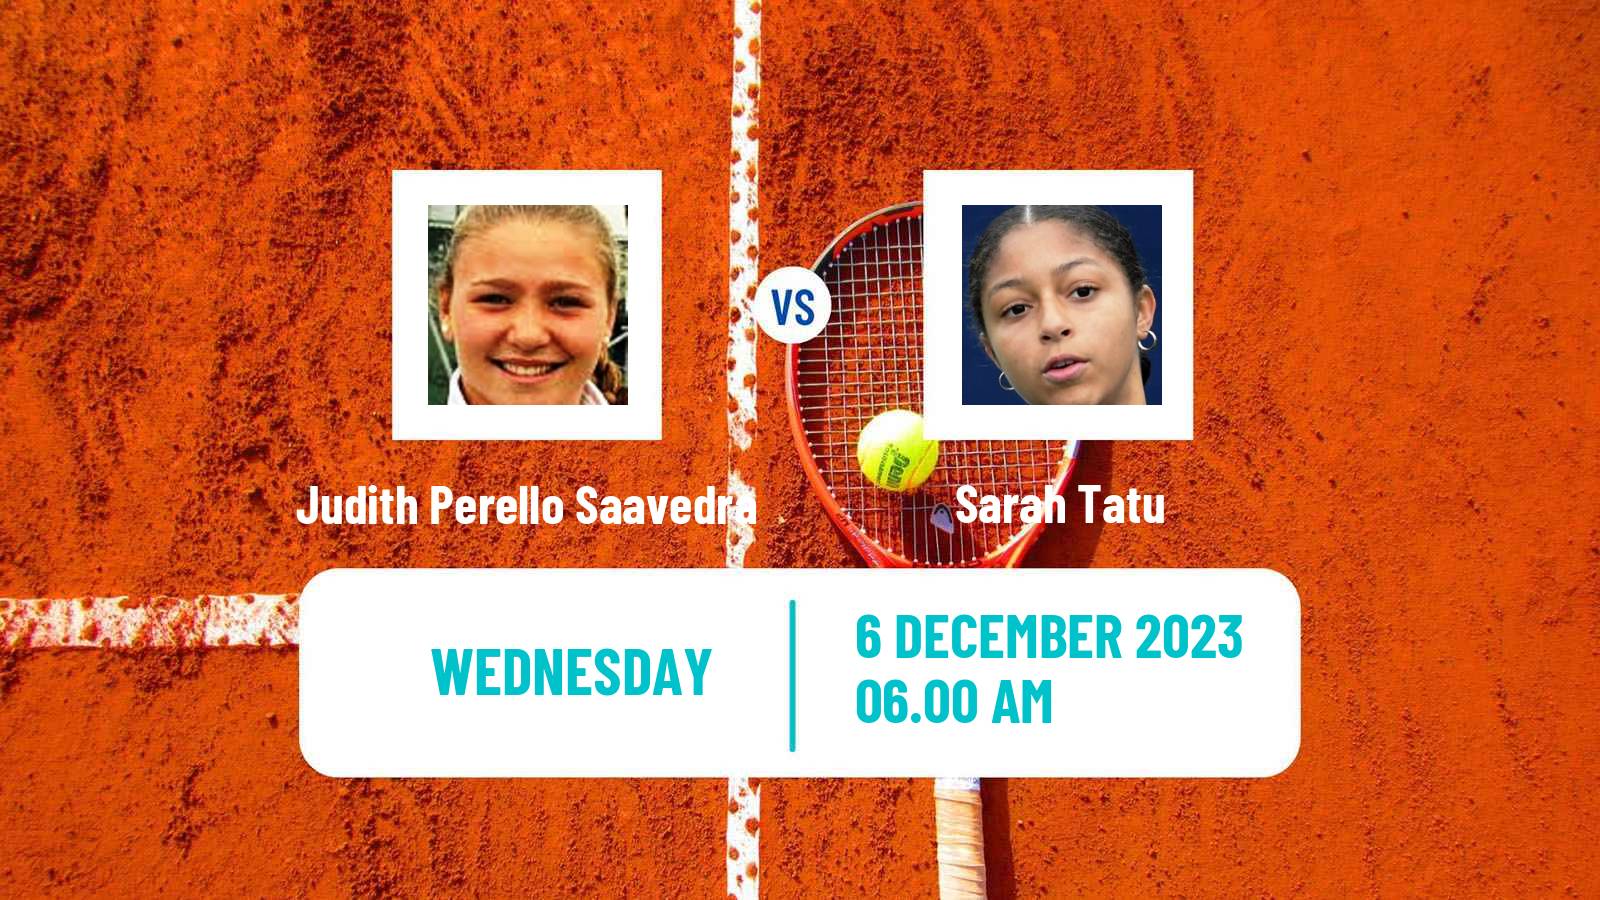 Tennis ITF W15 Valencia 2 Women Judith Perello Saavedra - Sarah Tatu